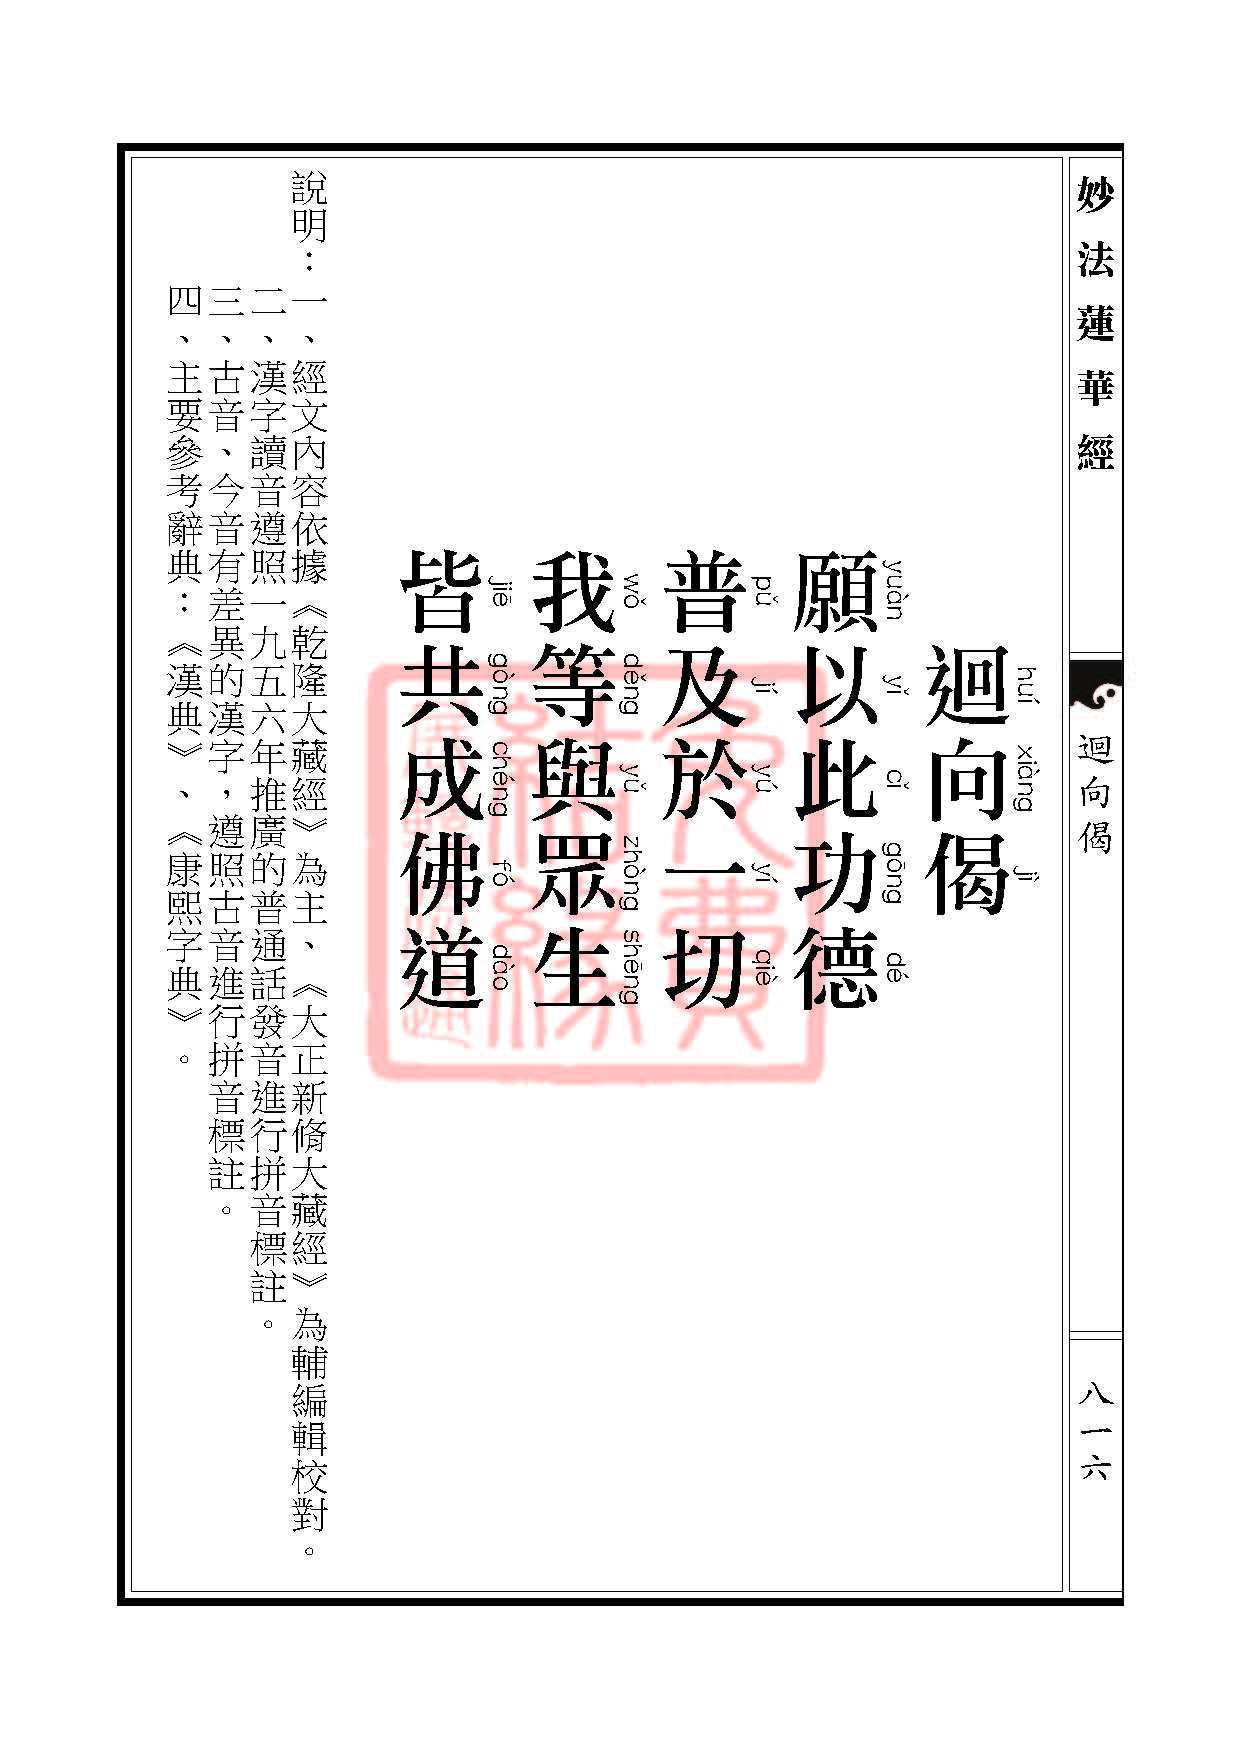 Book_FHJ_HK-A6-PY_Web_ҳ_816.jpg